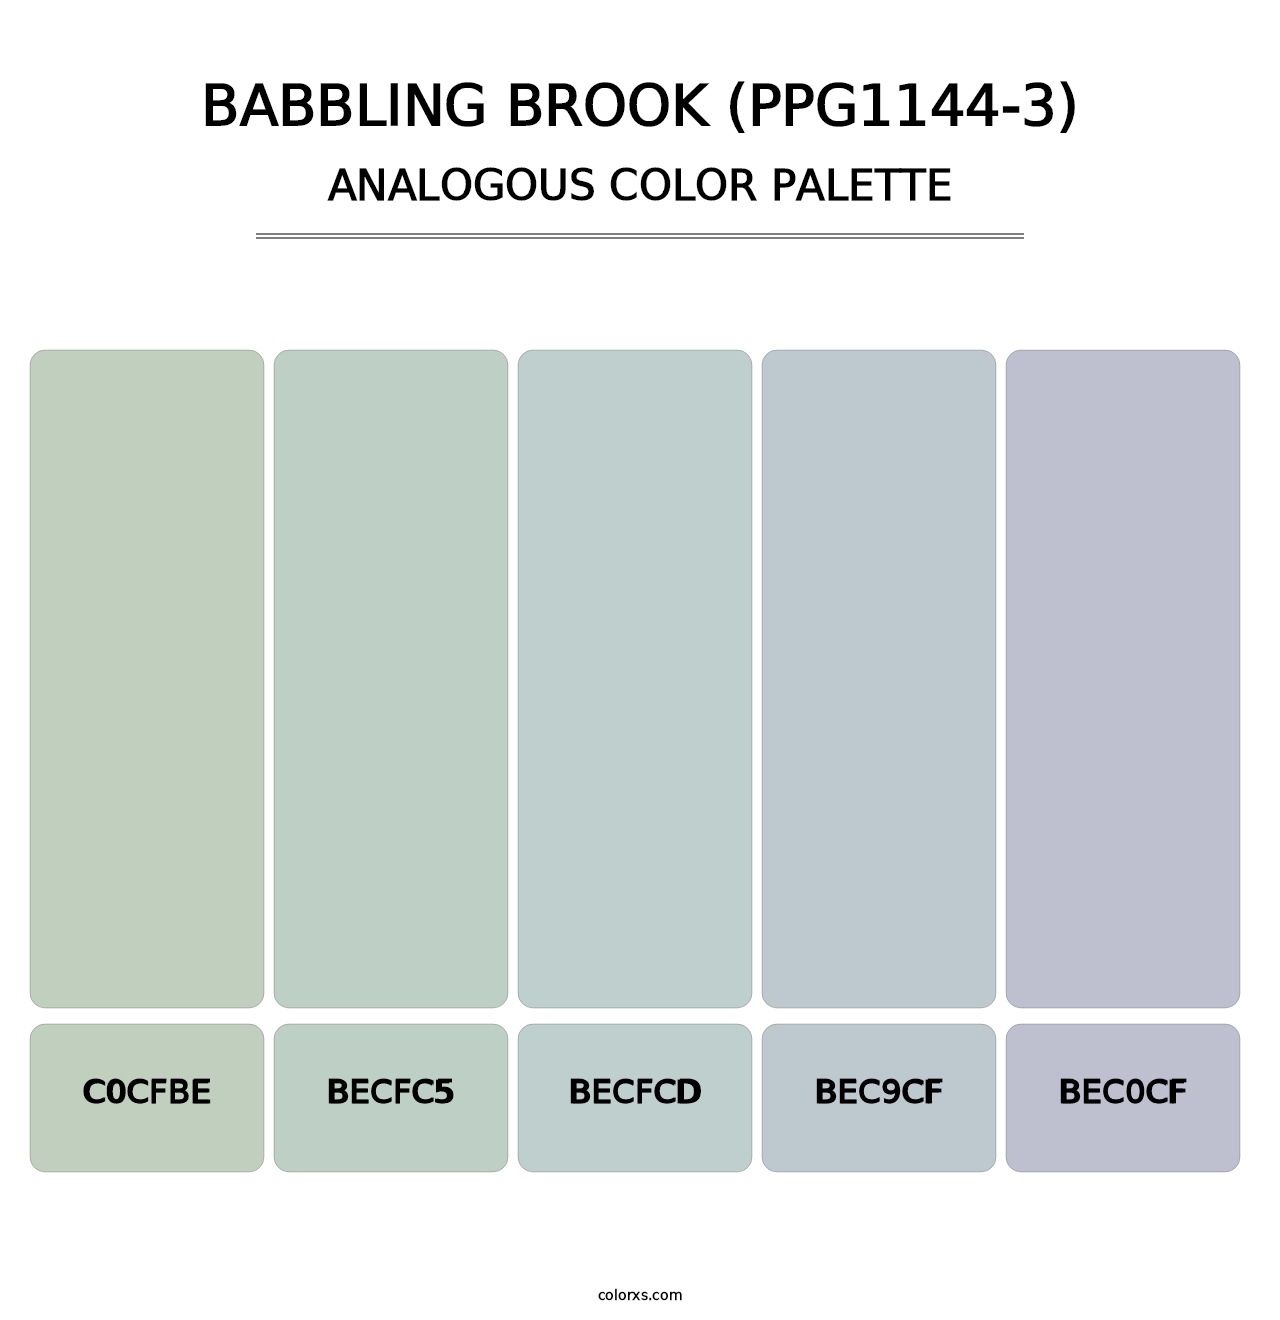 Babbling Brook (PPG1144-3) - Analogous Color Palette